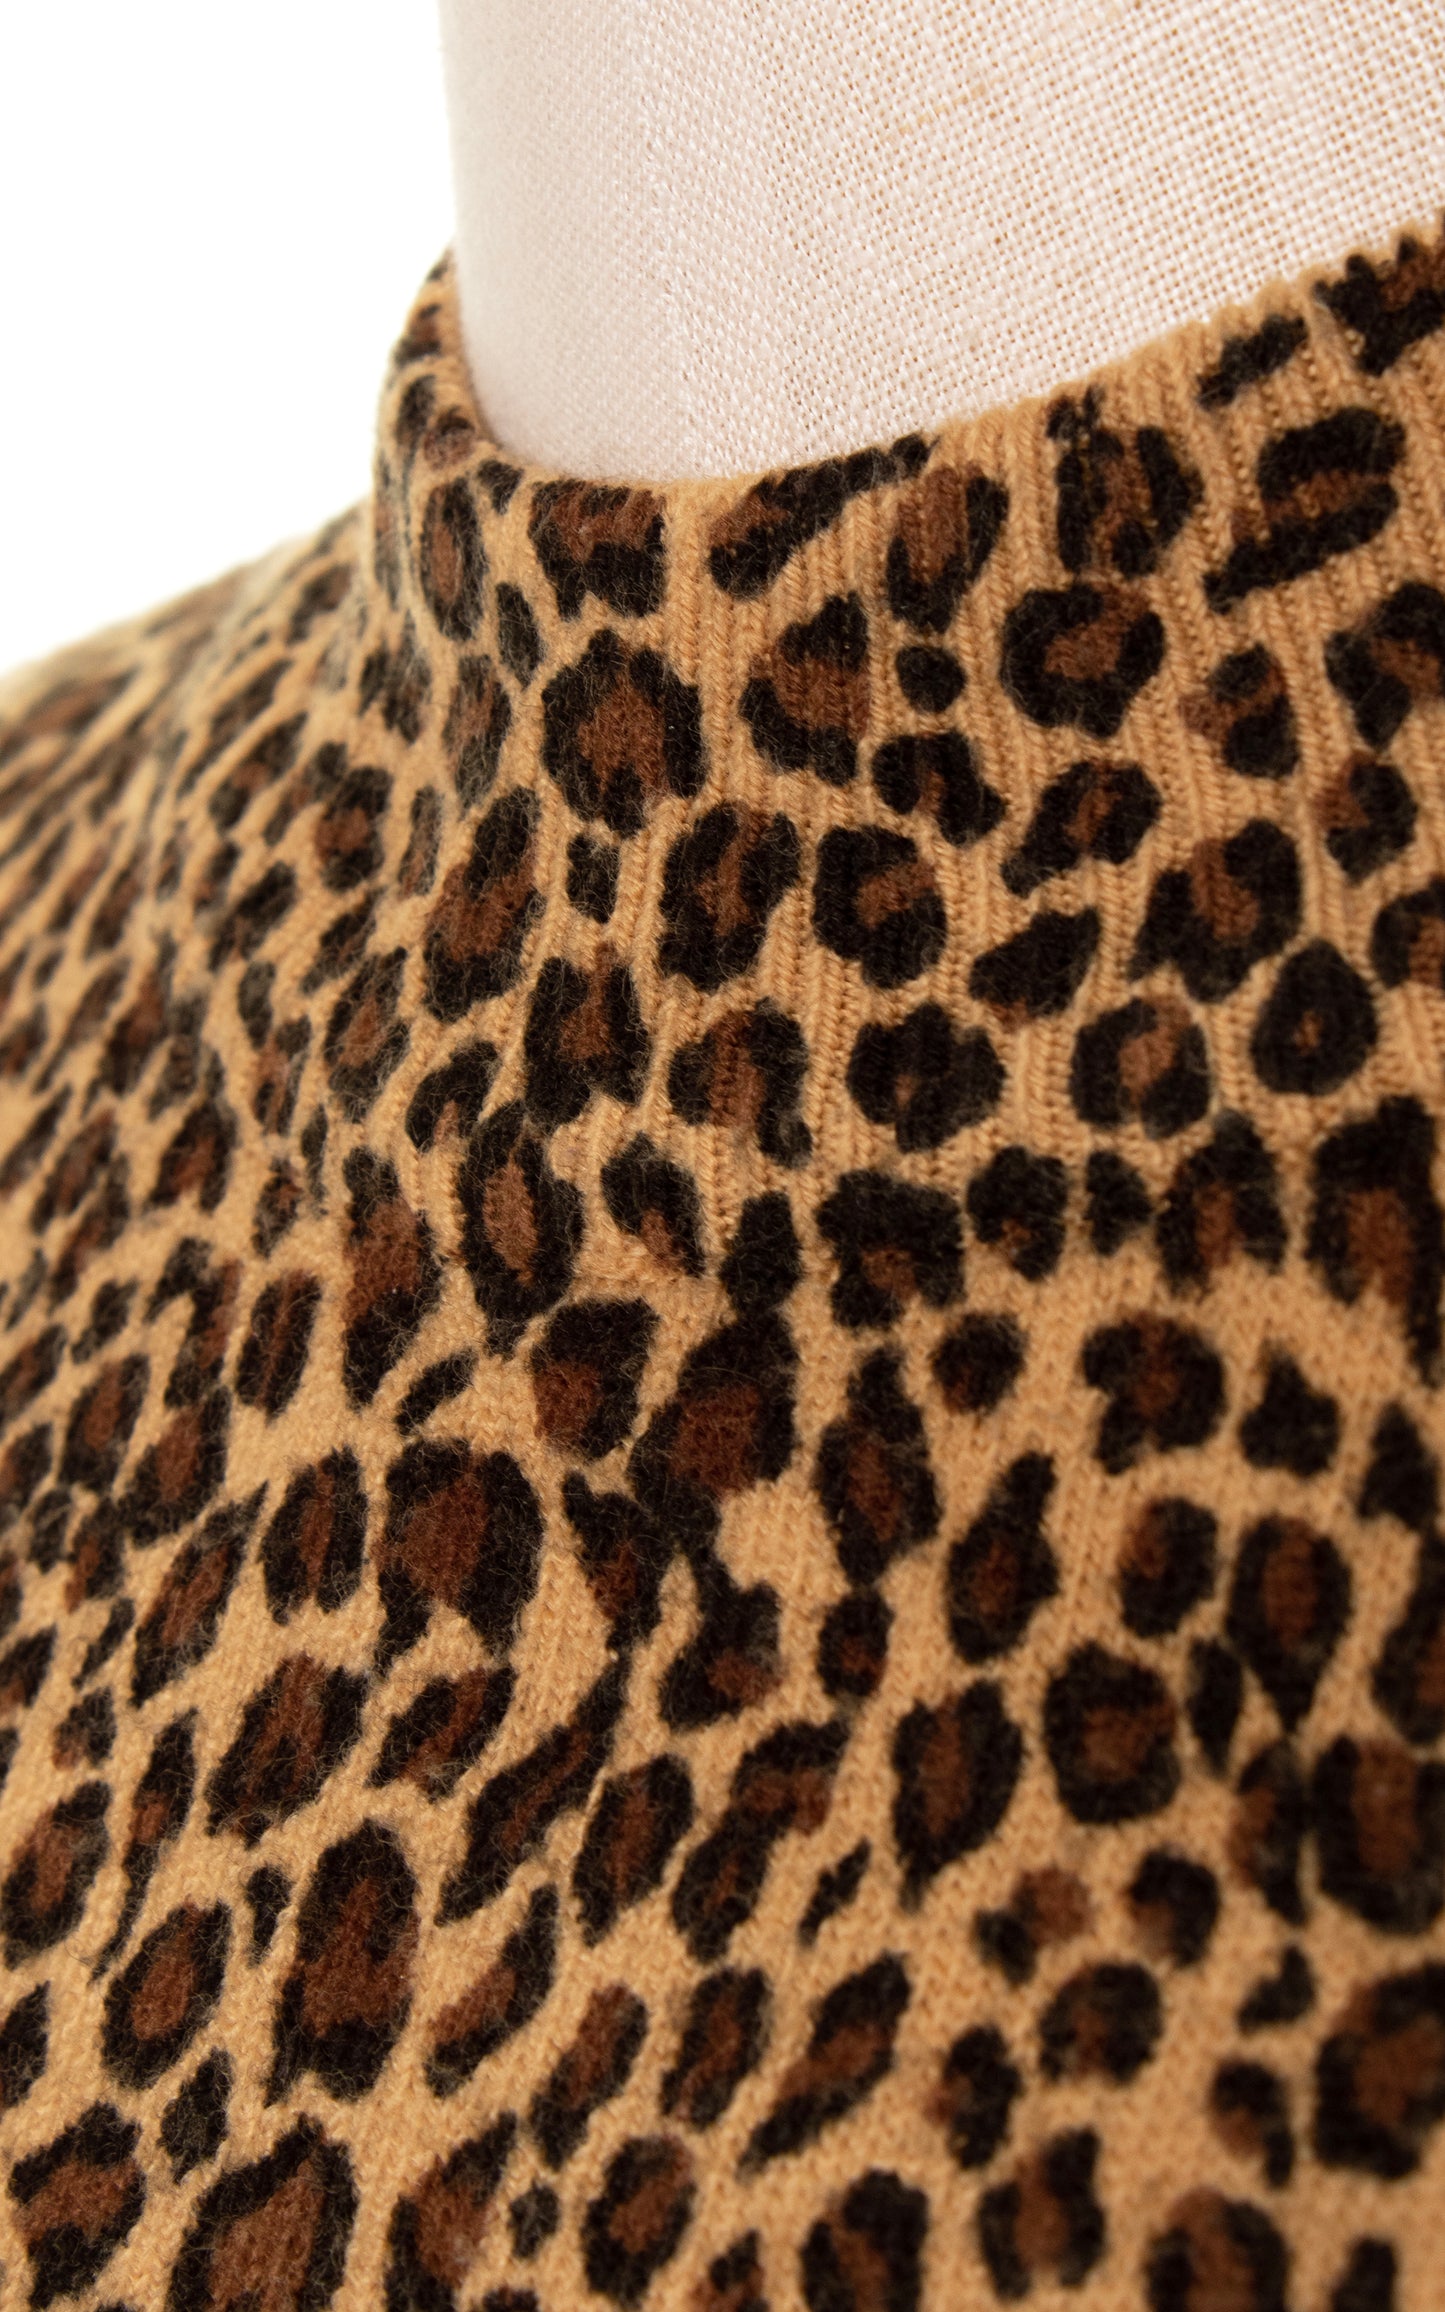 1980s Leopard Print Knit Angora Wool Sweater Top | medium/large